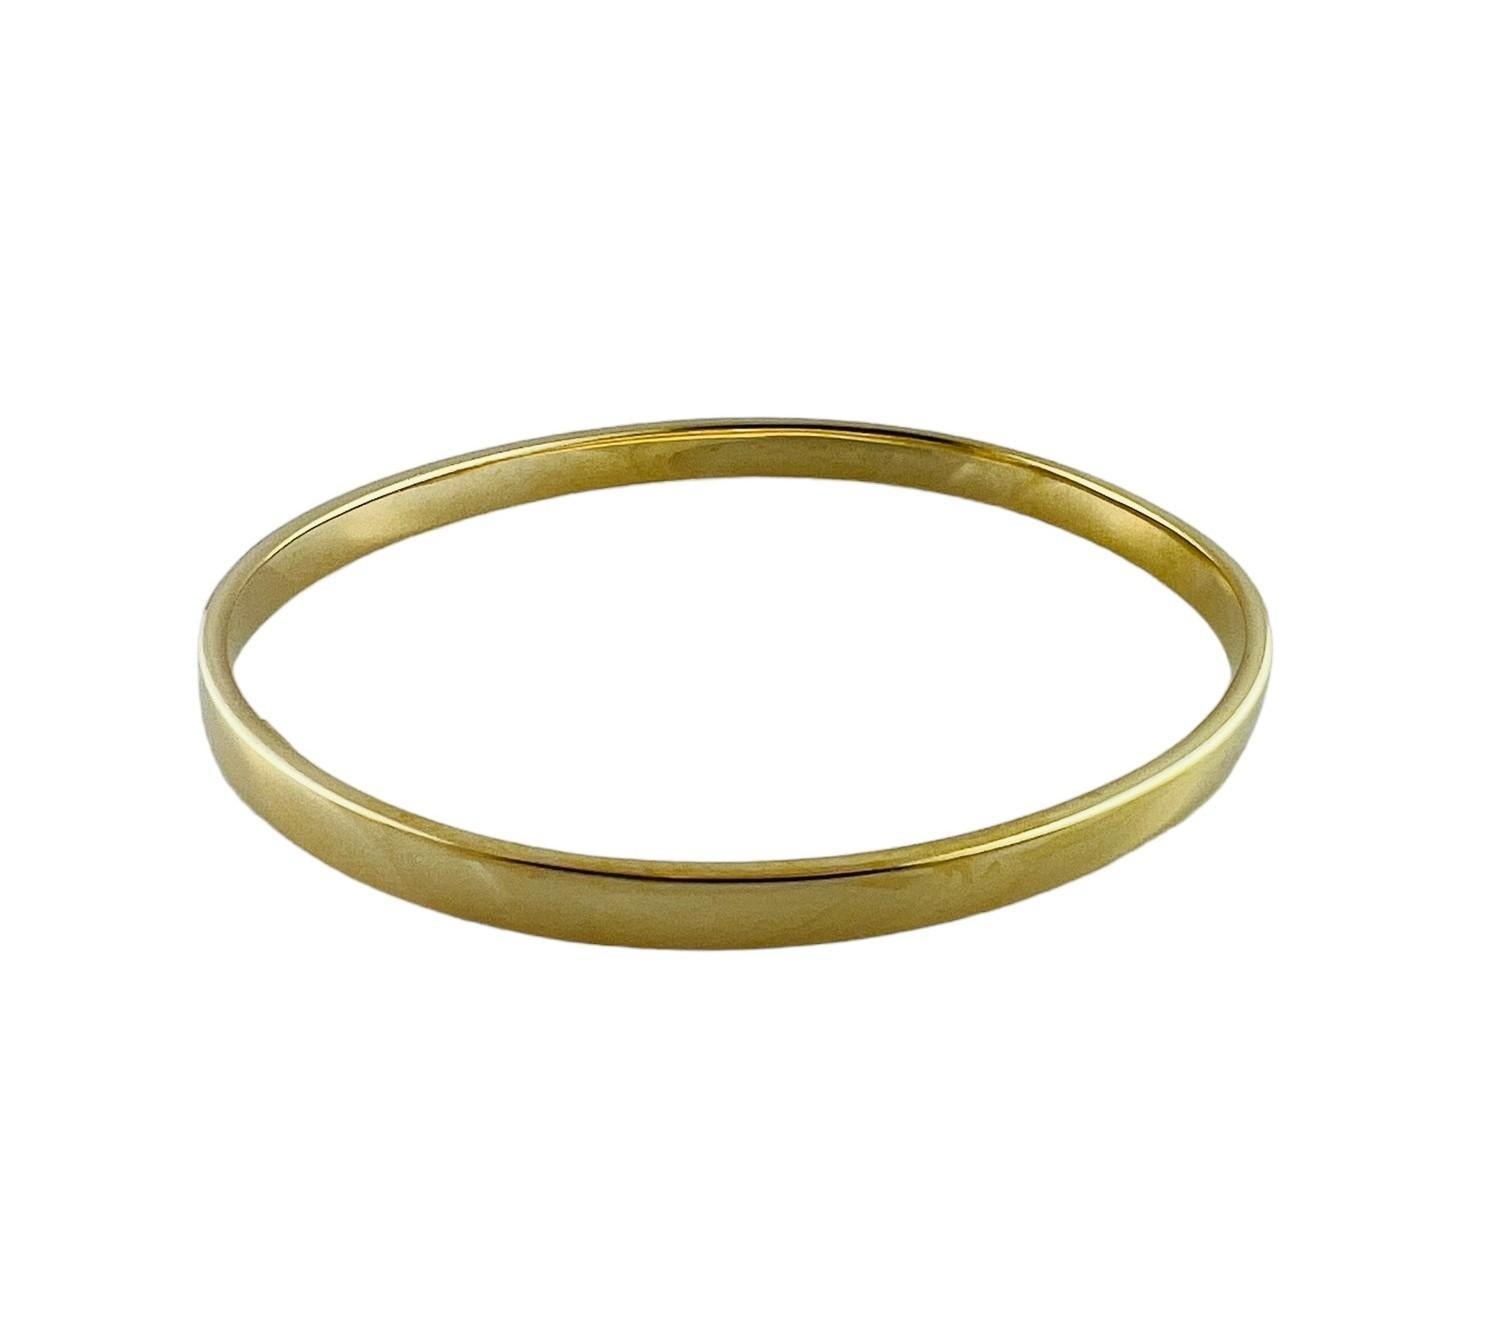 Tiffany & Co. 18K Yellow Gold Oval Bangle Bracelet #16676 2